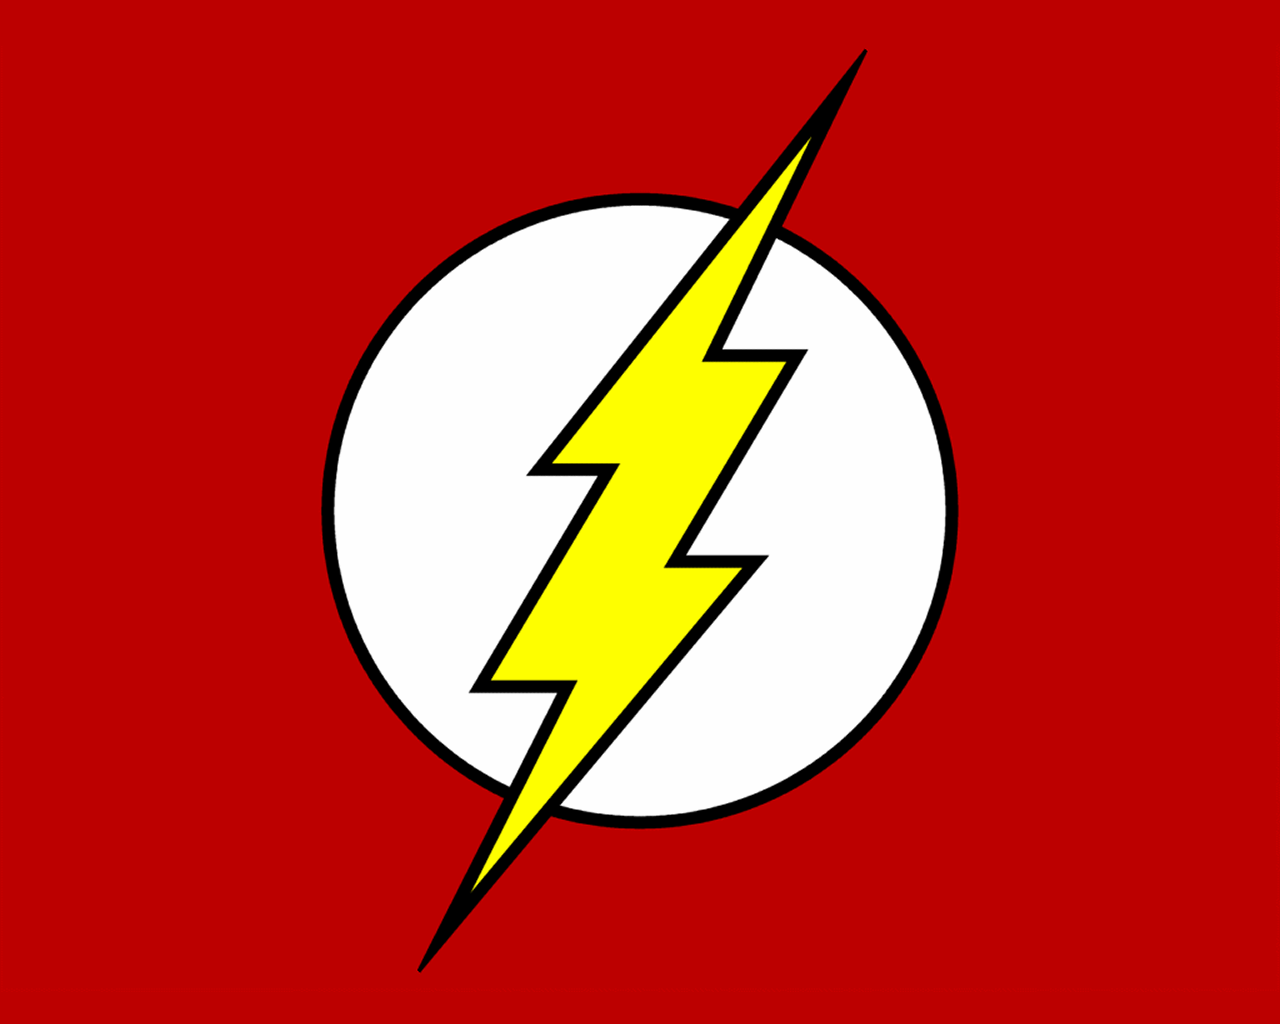 The flash logo clipart.